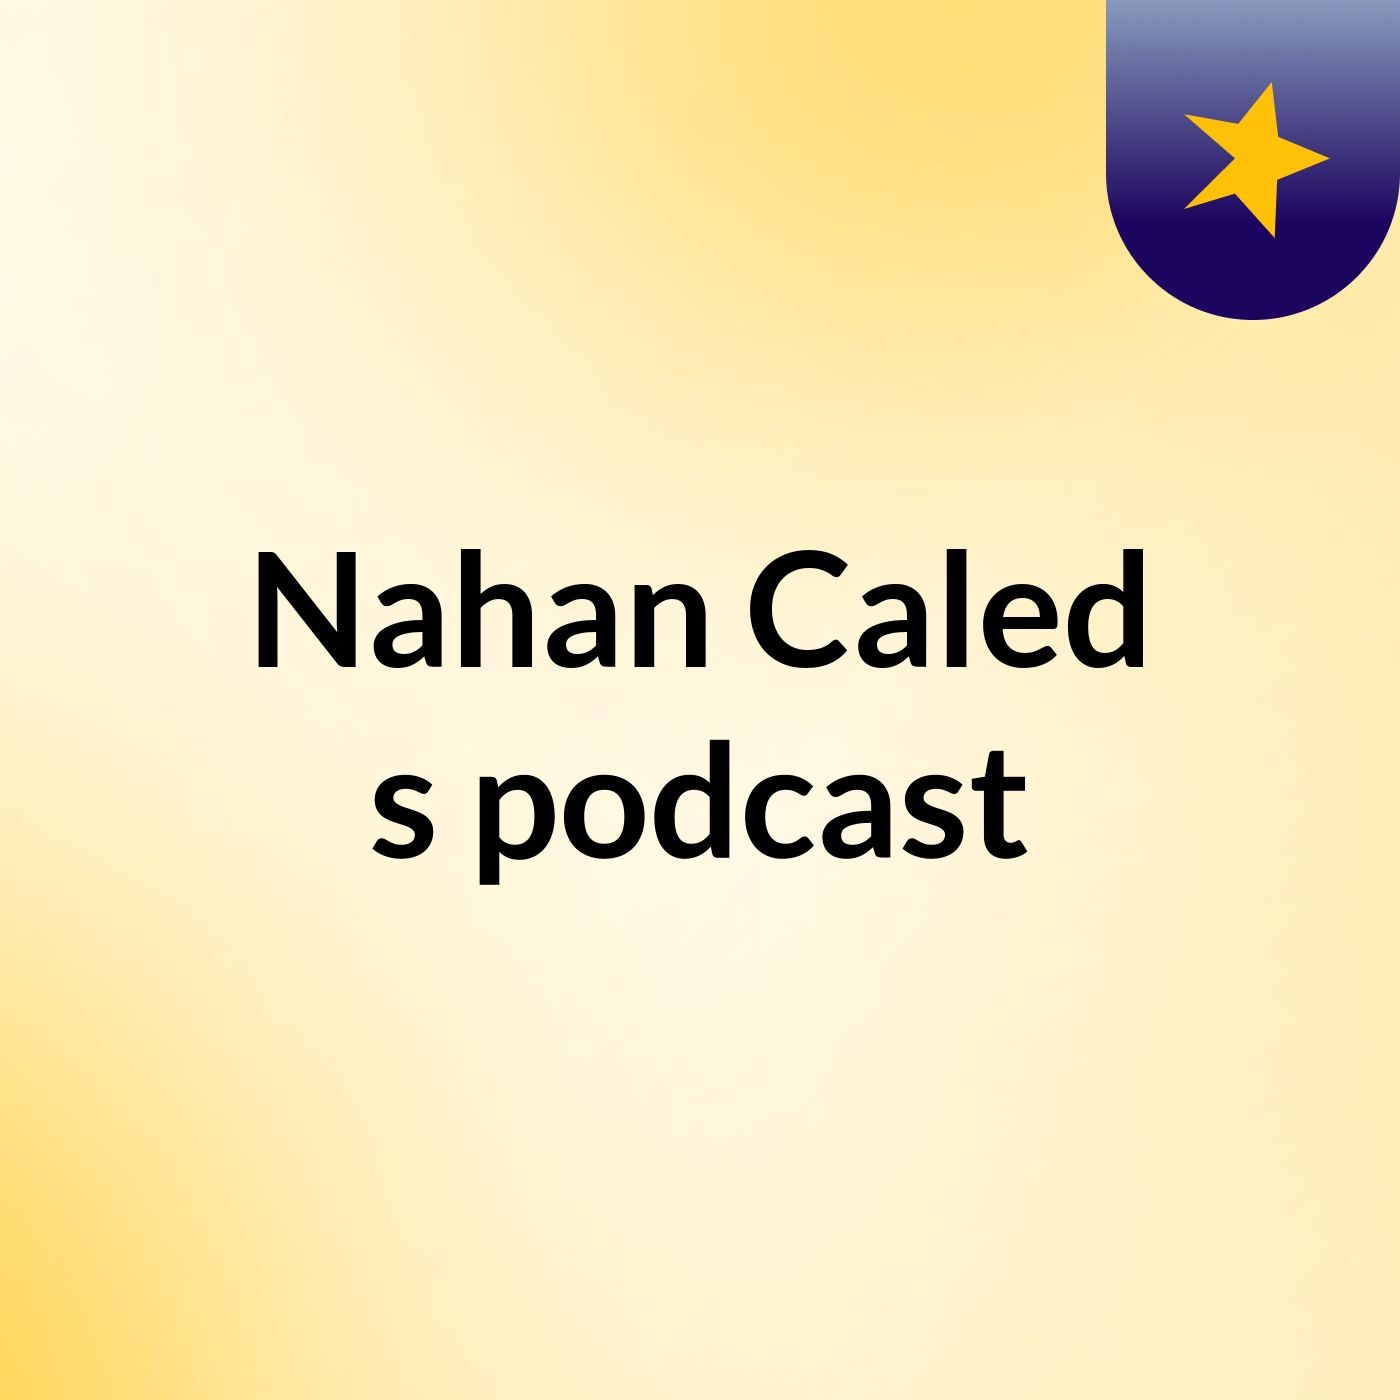 Nahan Caled's podcast